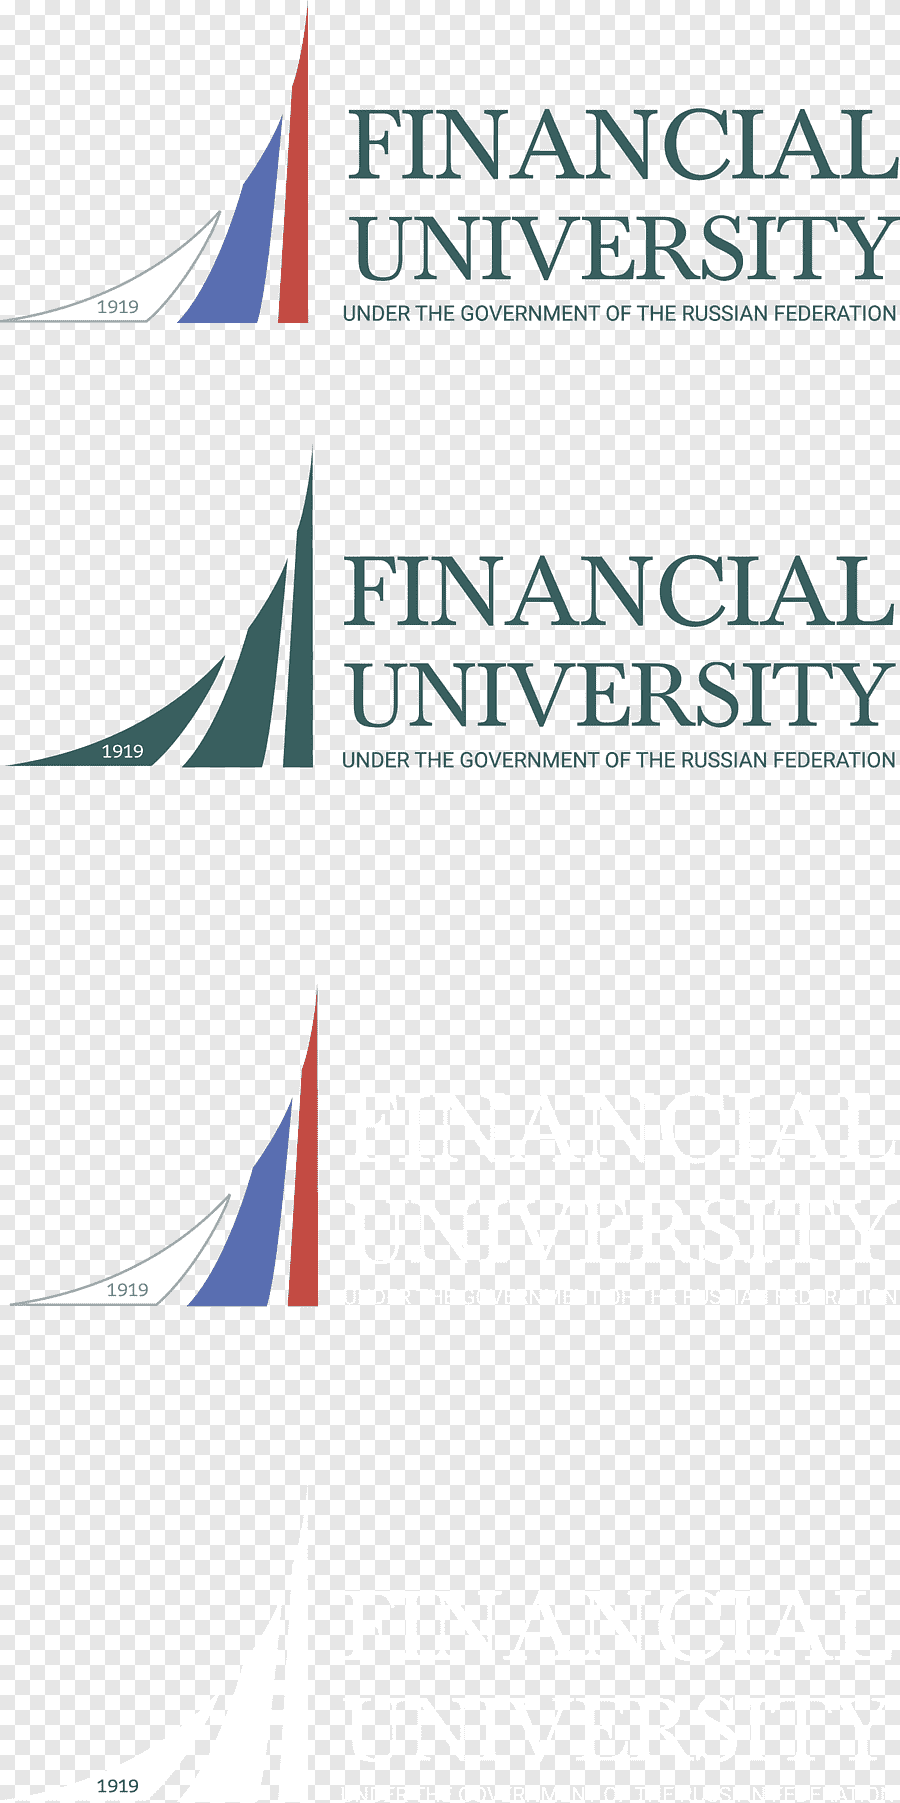 Financial university